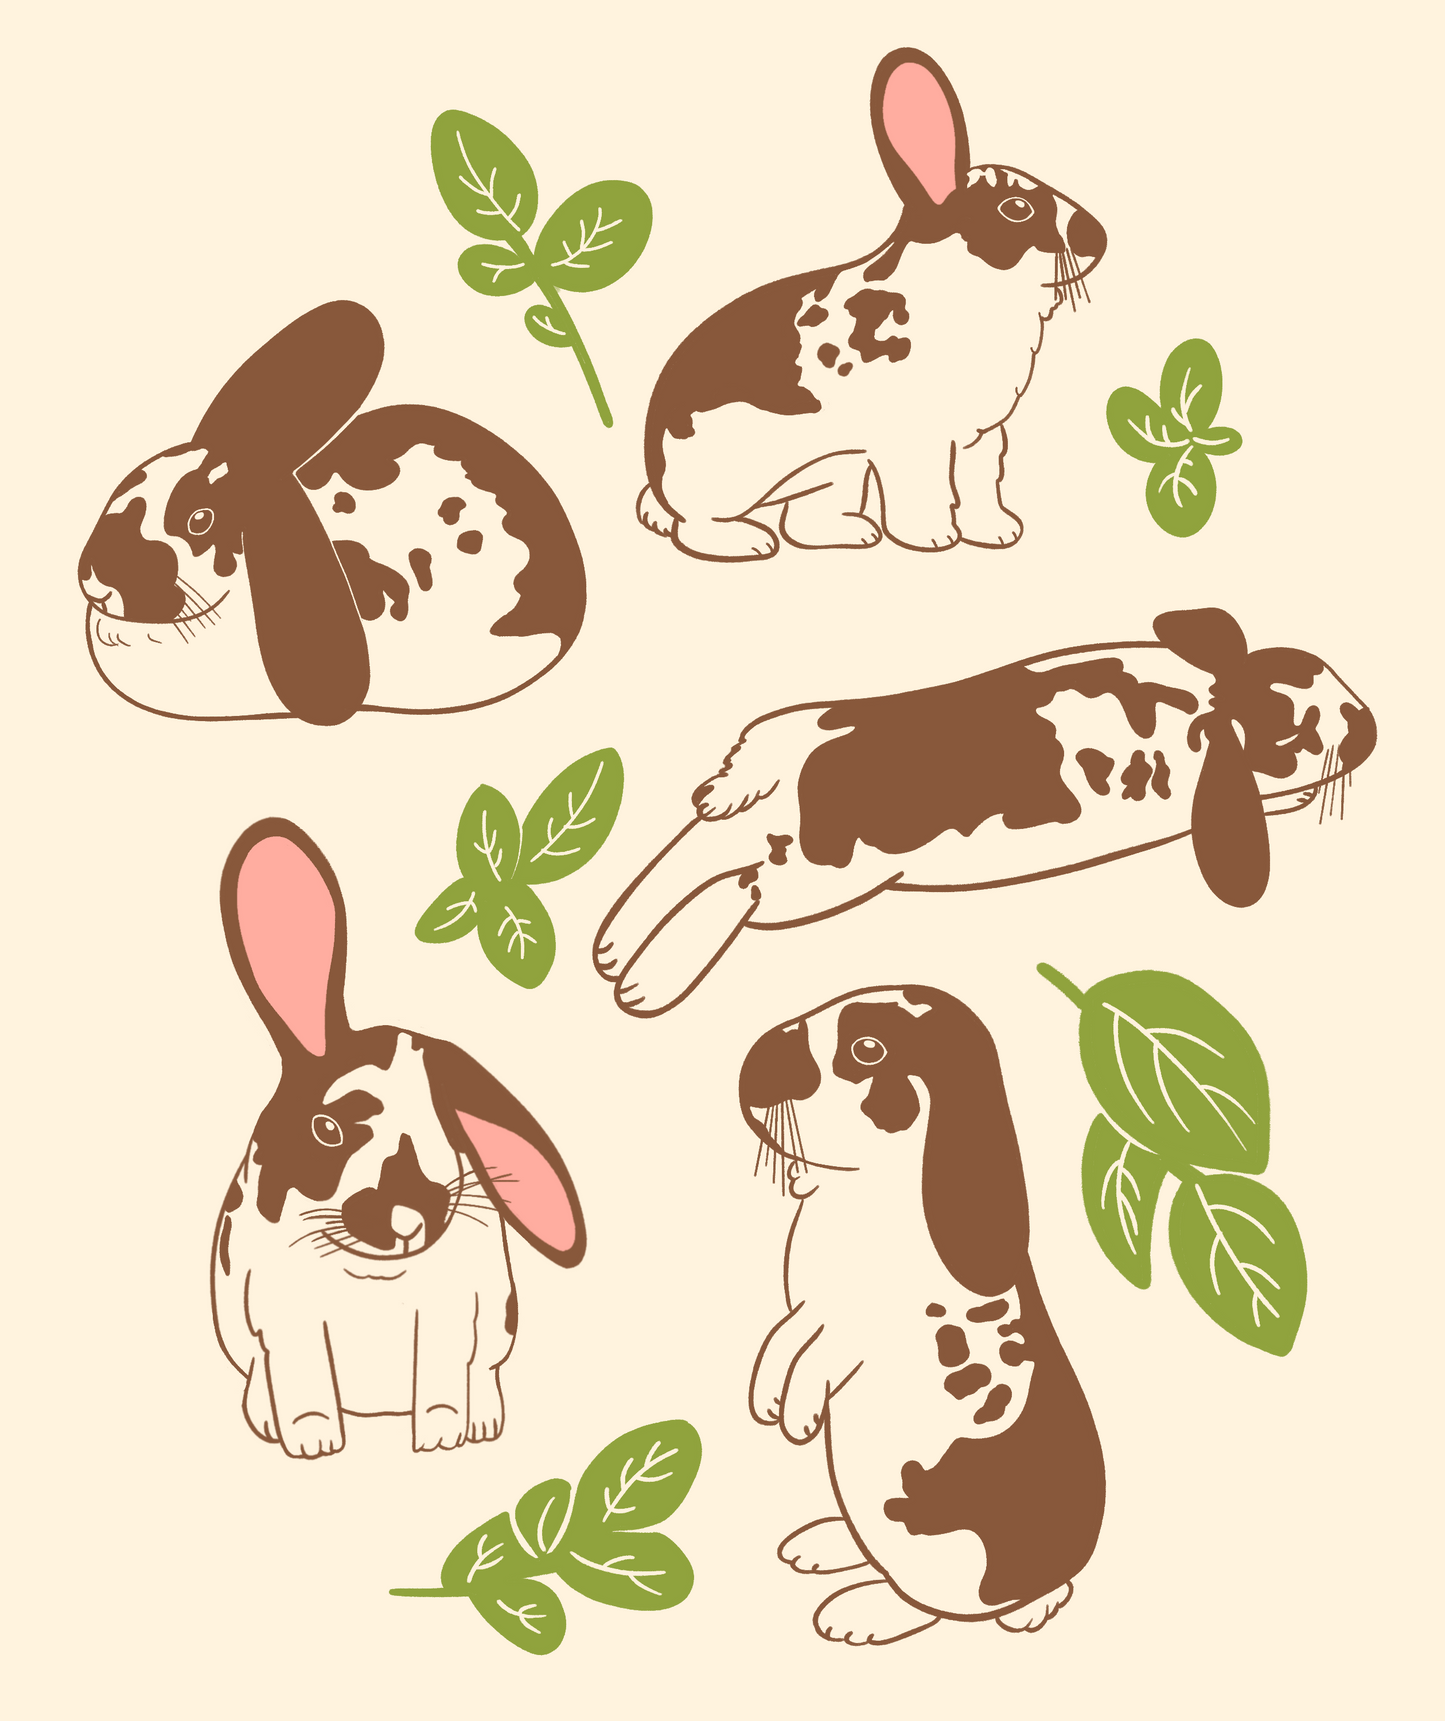 Basil the Bunny Vinyl Sticker Sheet!